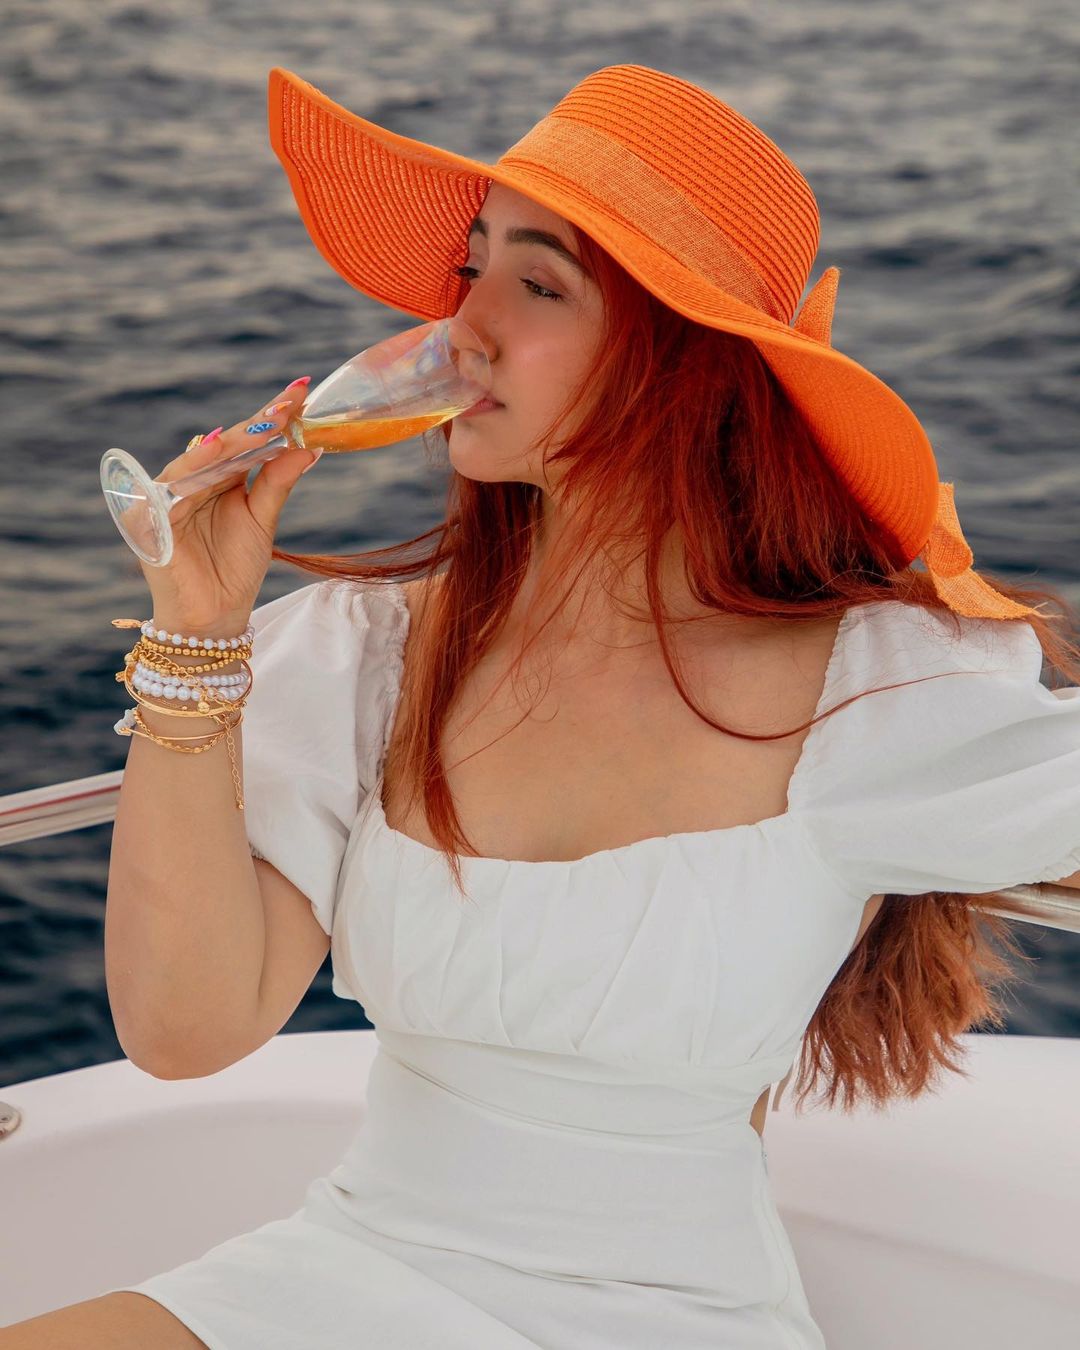 Ashnoor in white dress and orange hat